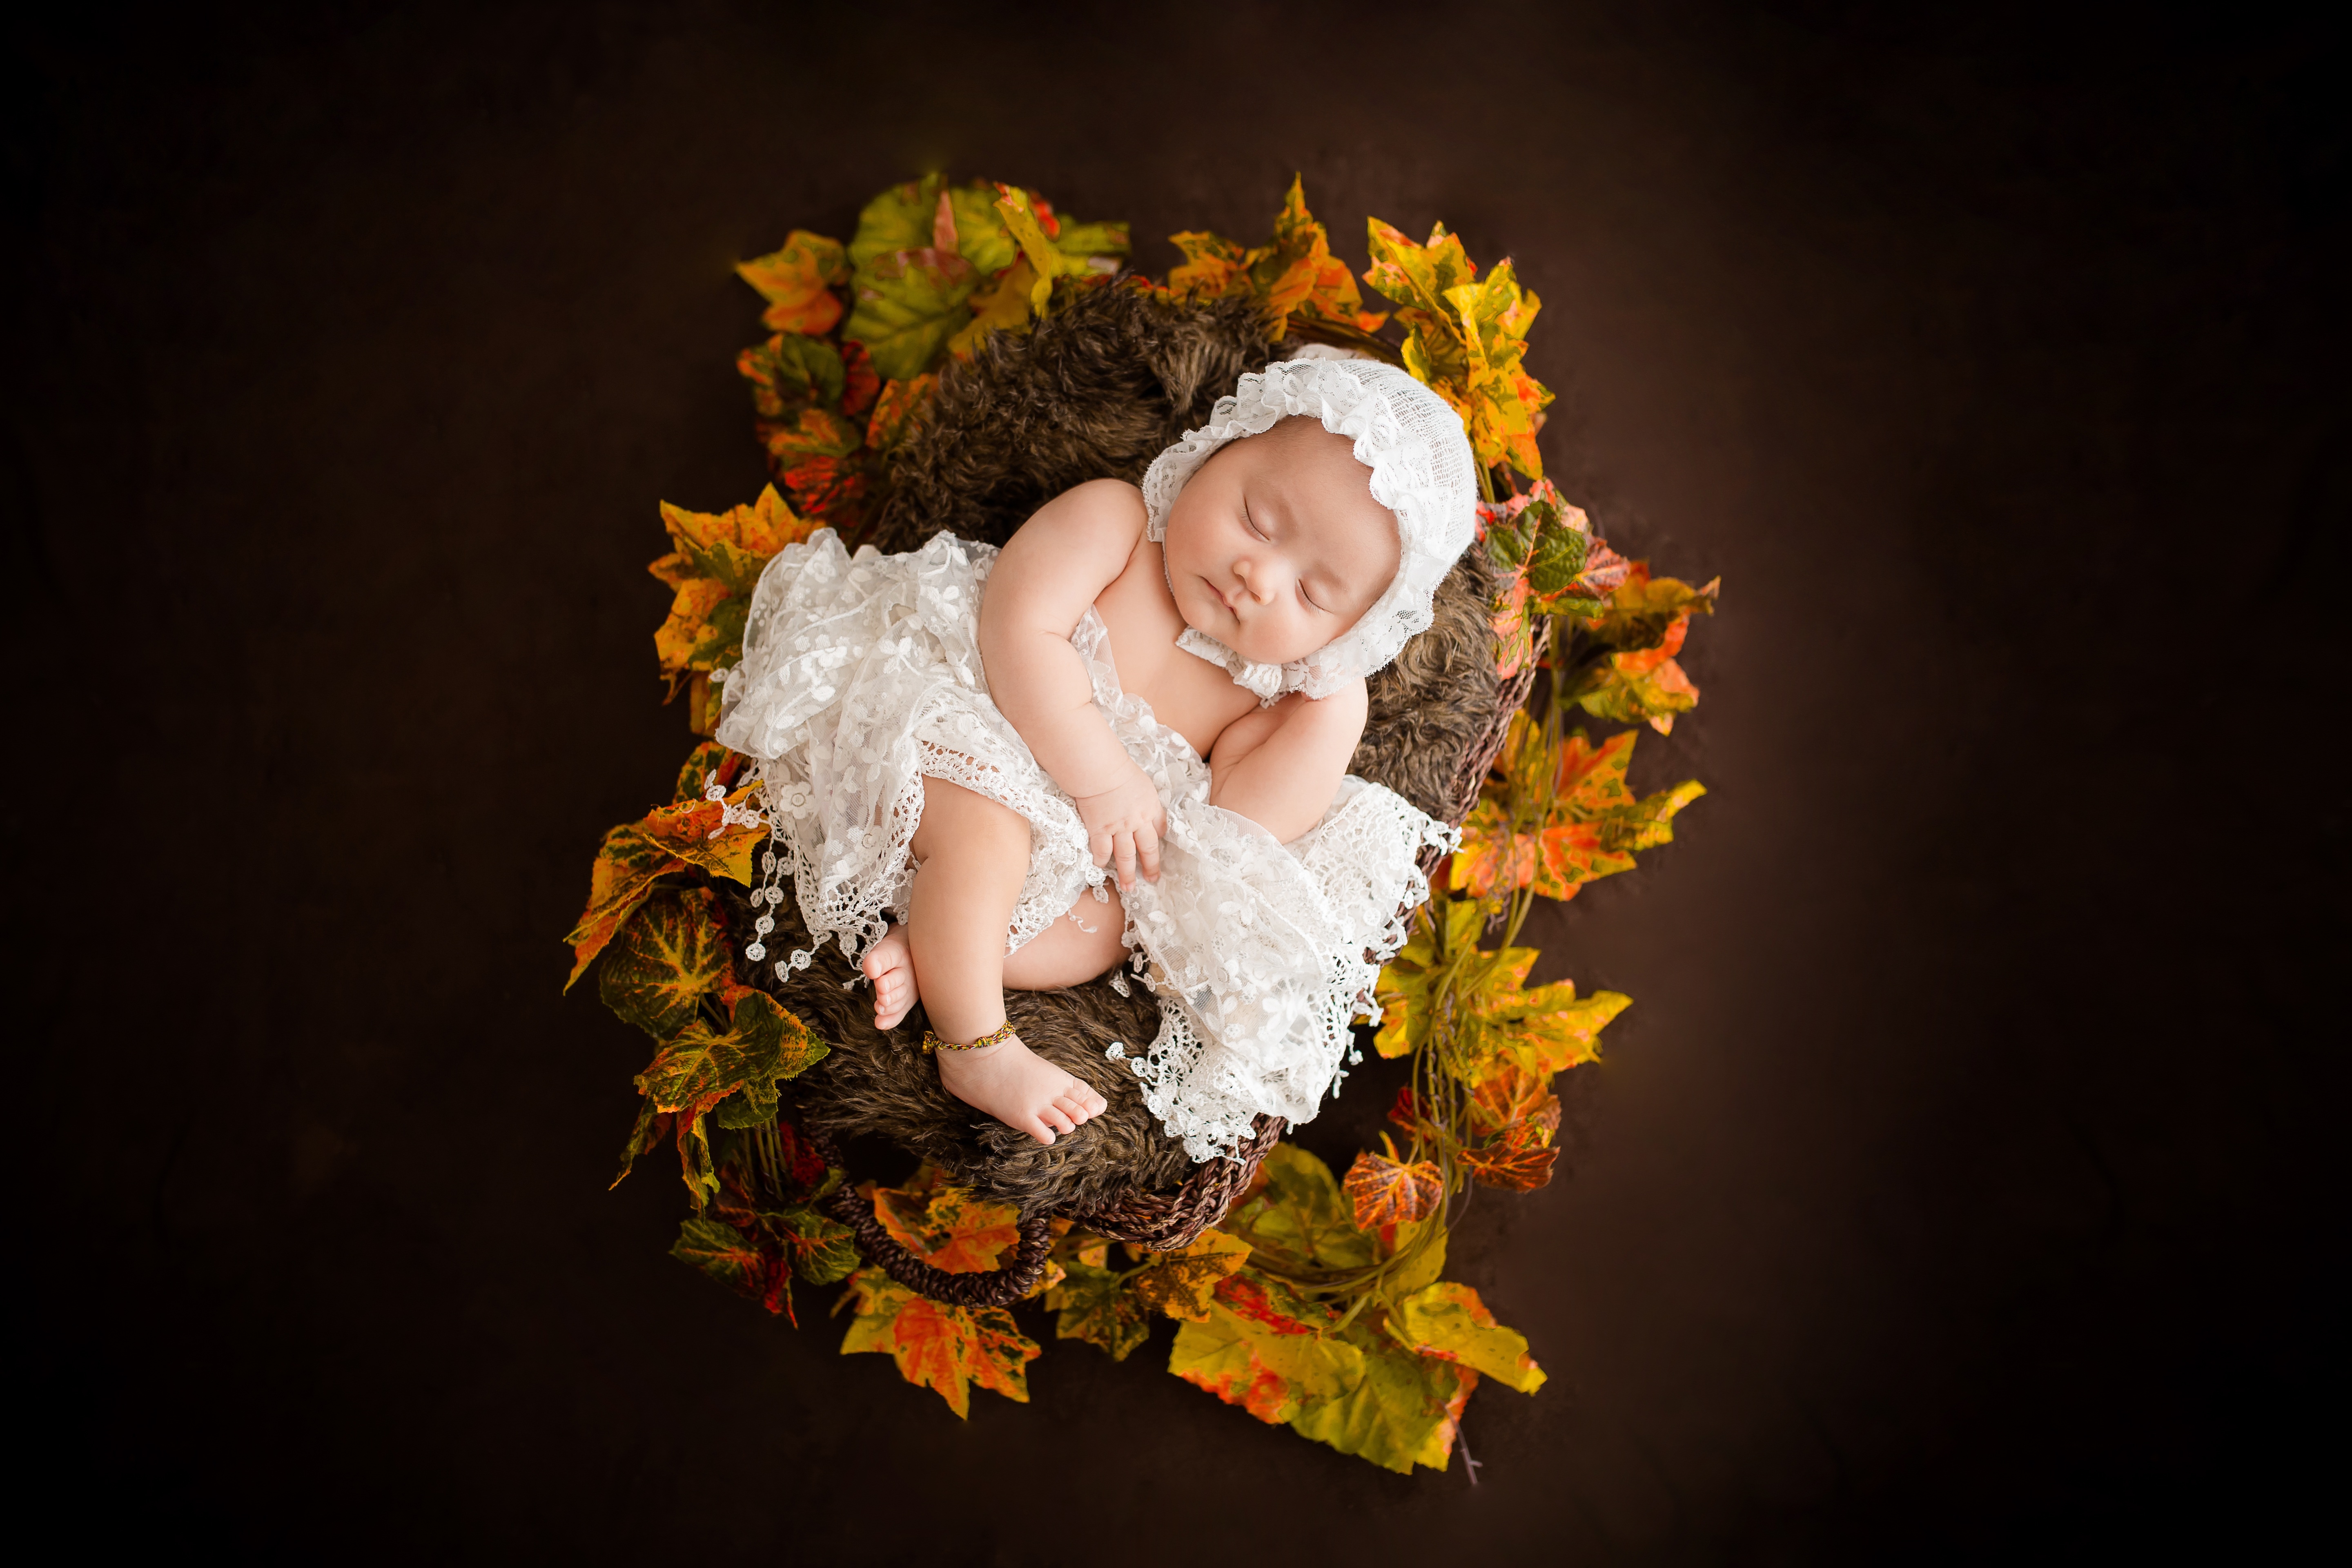 HD wallpaper, Brown Aesthetic, 5K, Brown, Dark Background, Fur, White Dress, Autumn Leaves, Basket, Cute Baby, Newborn